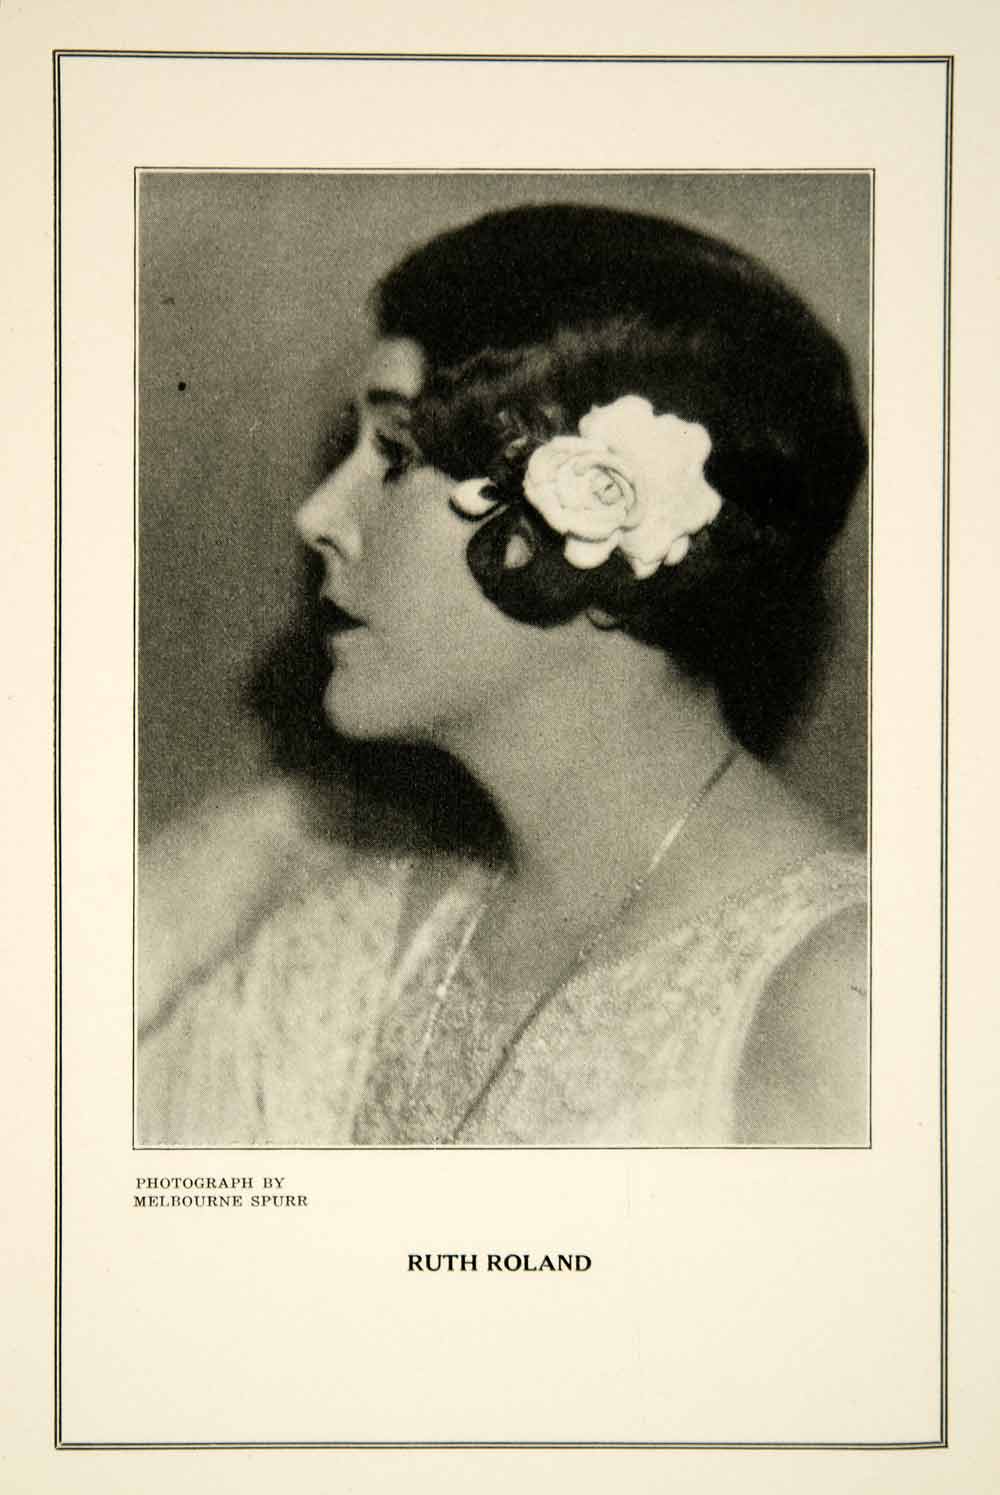 1927 Print Ruth Roland Actress Silent Film Era Movie Producer Melbourne Spurr